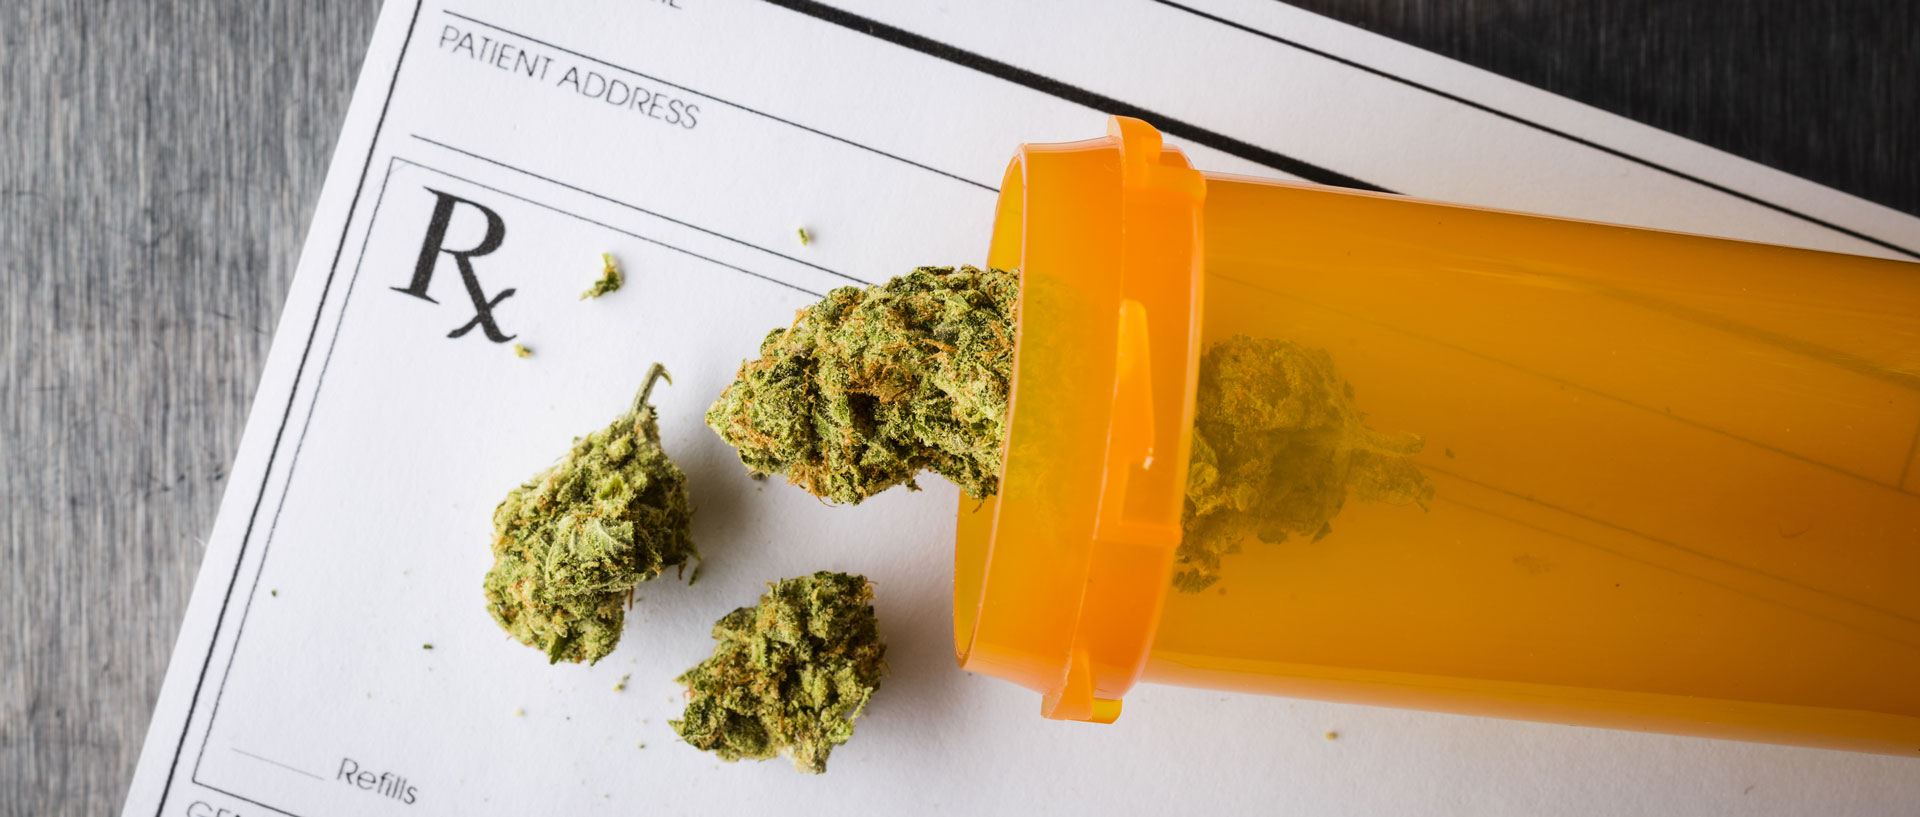 Can medical marijuana be curbing the opioid epidemic?